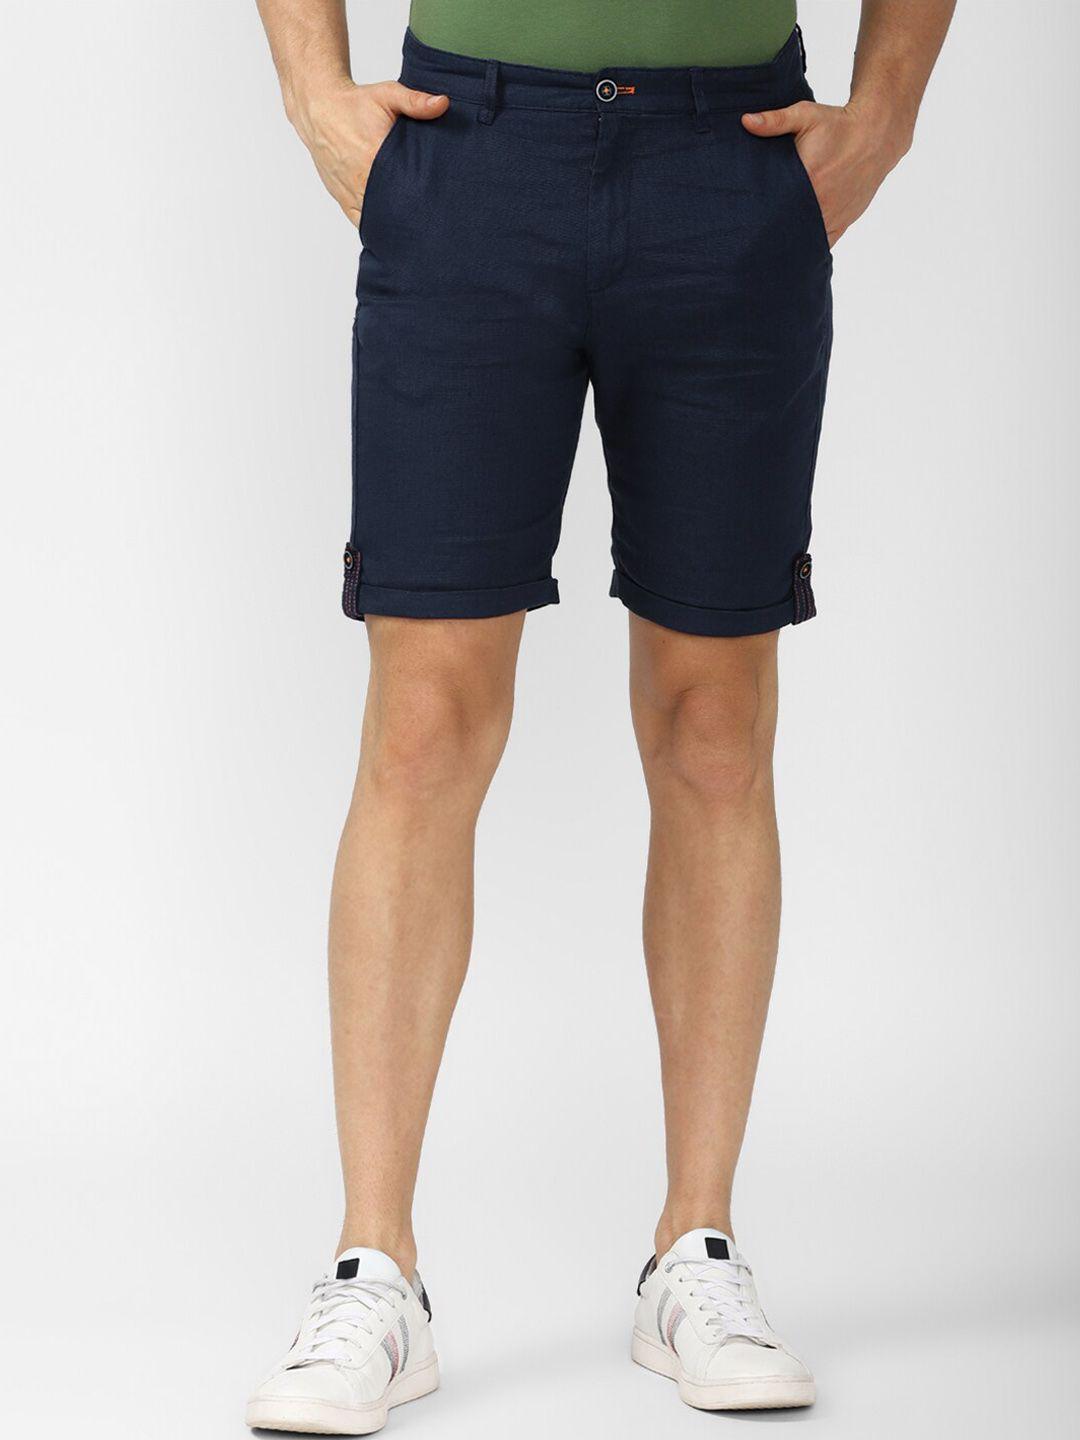 peter england casuals men navy blue shorts